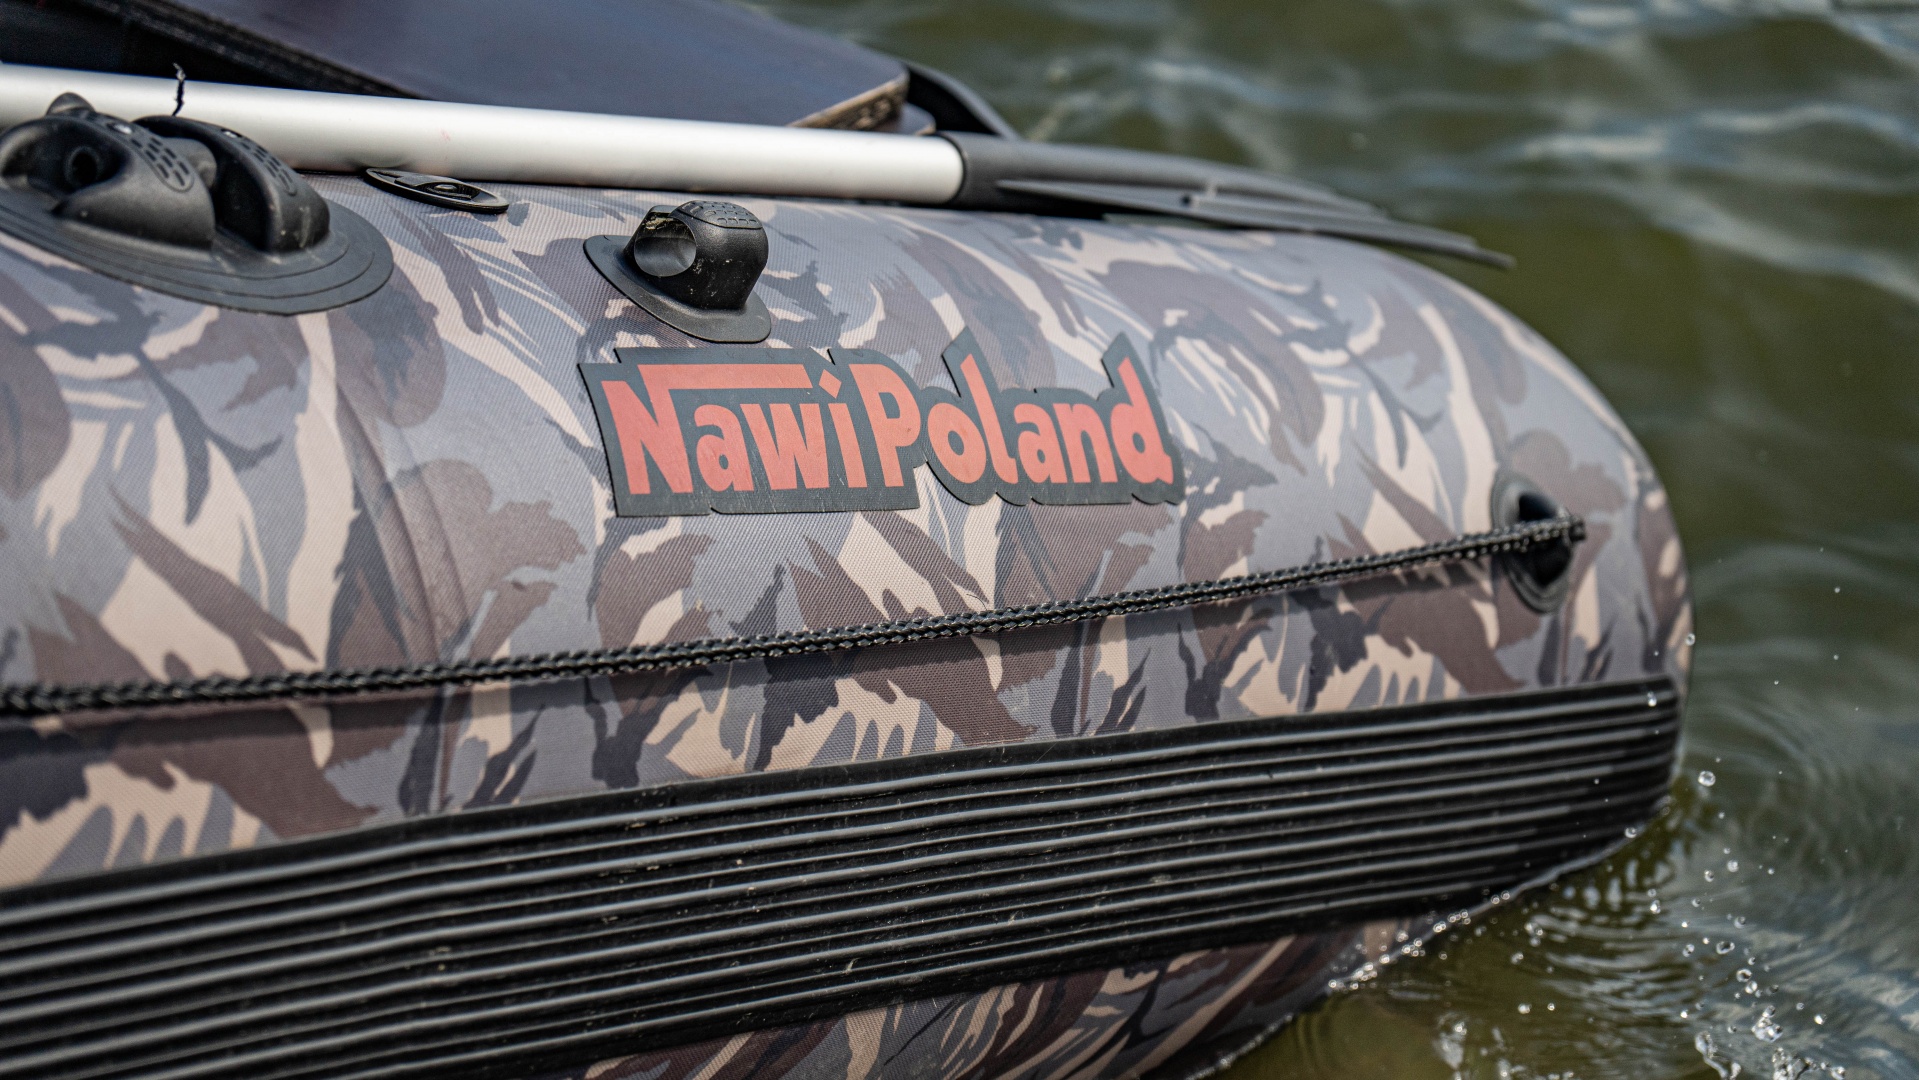 NawiPoland CAT 300 Inflatable Boat  - Katamaran